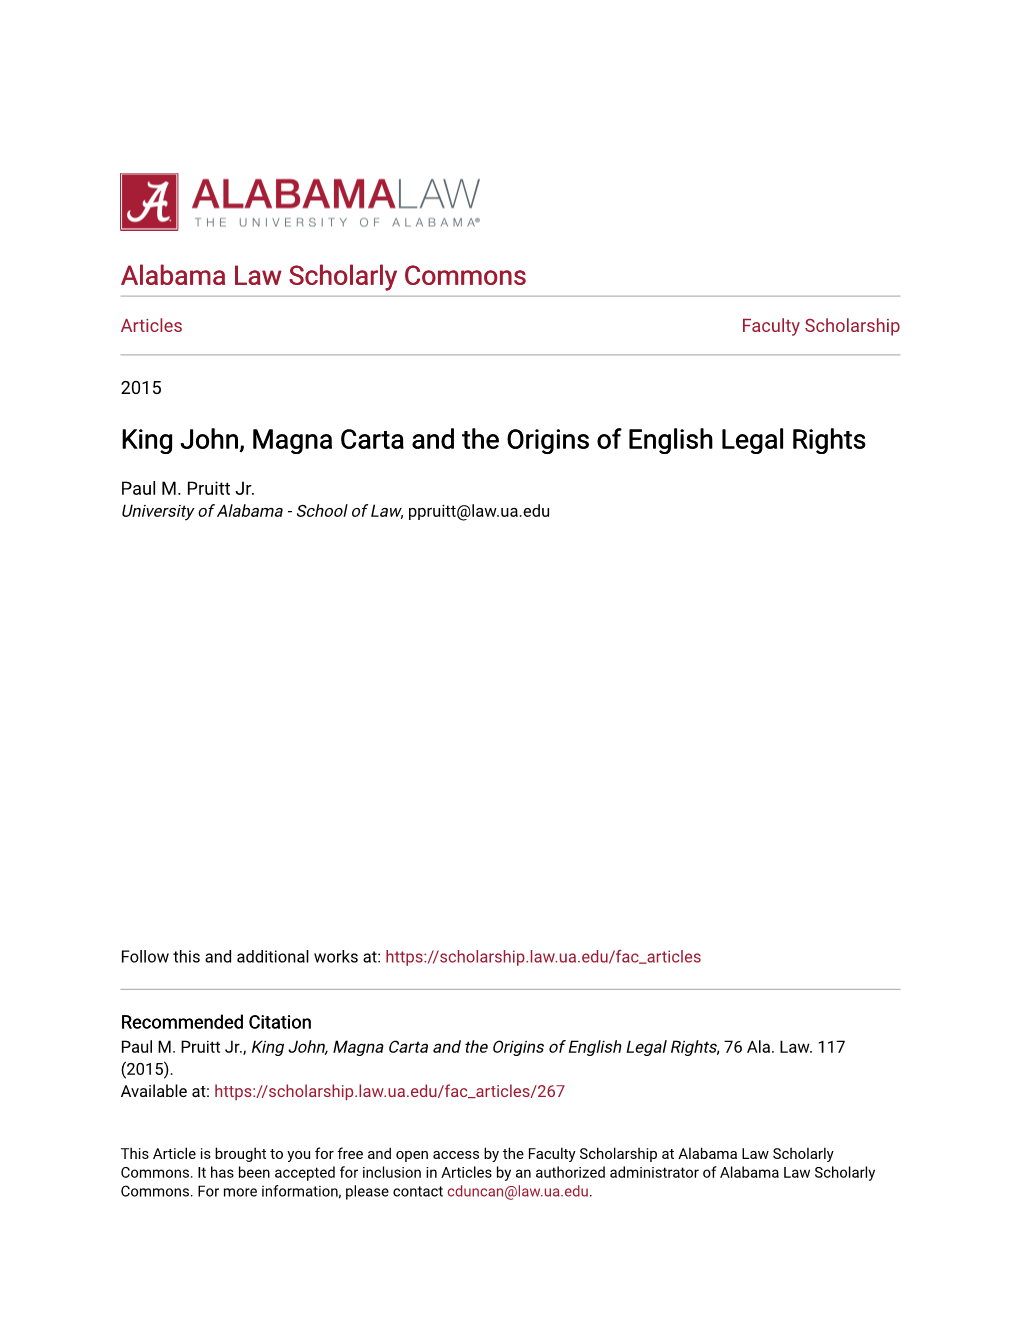 King John, Magna Carta and the Origins of English Legal Rights